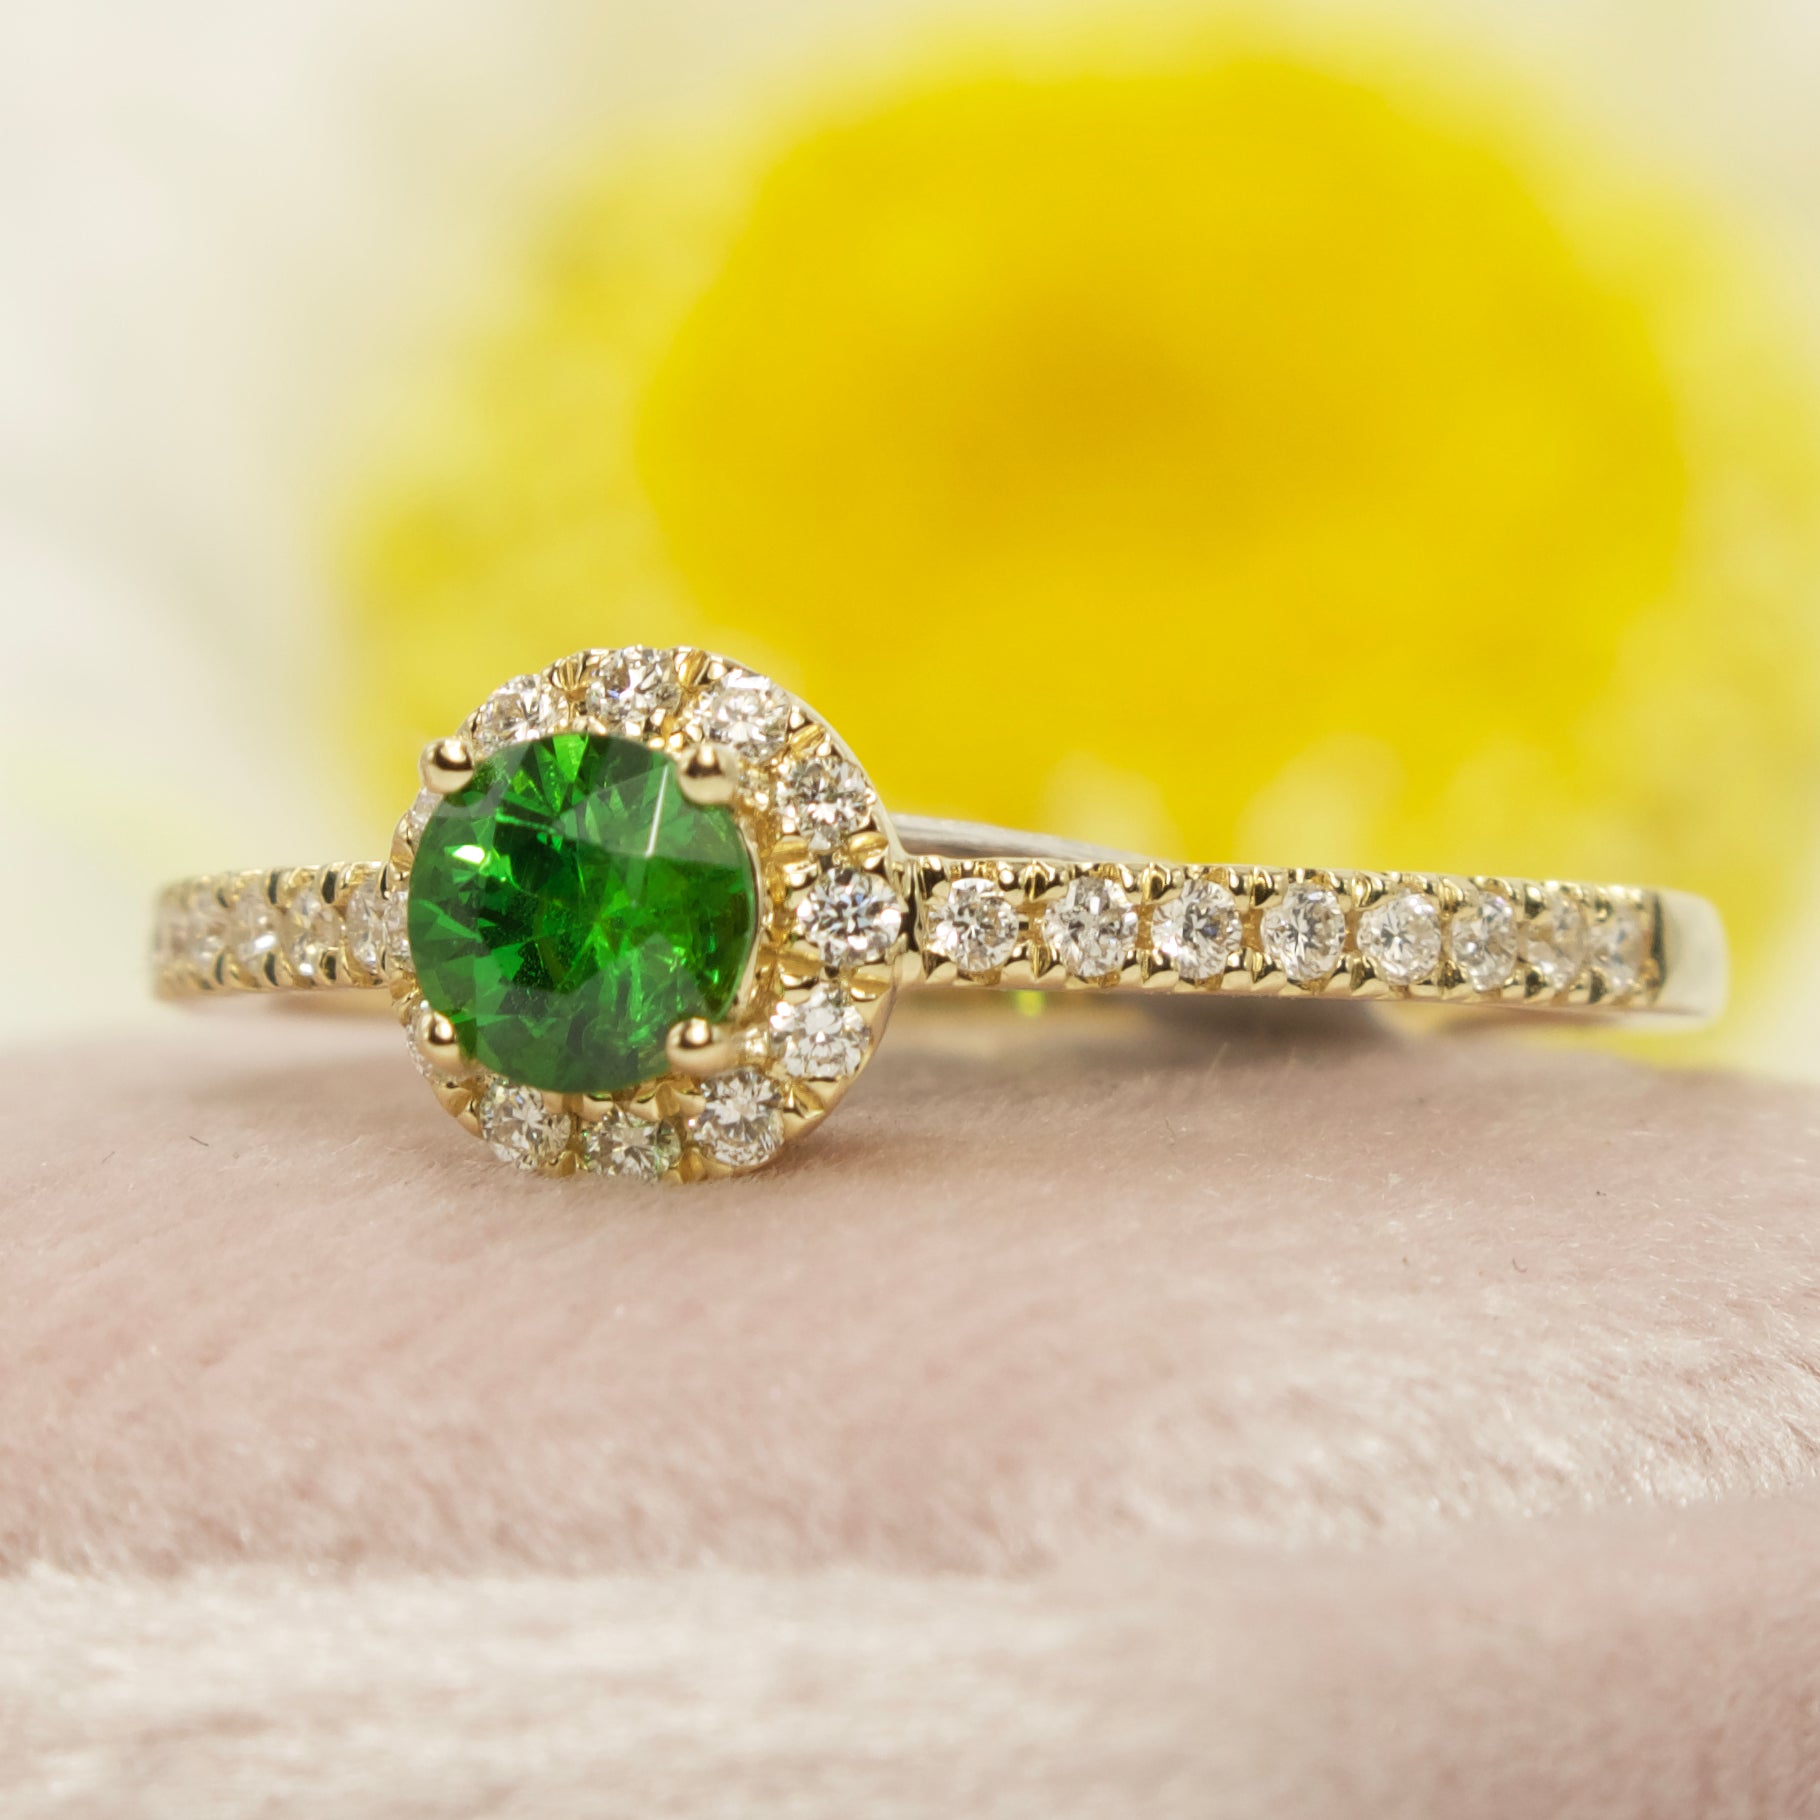 Round Green Tsavorite Garnet Engagement Ring with Diamond Halo in Yellow Gold